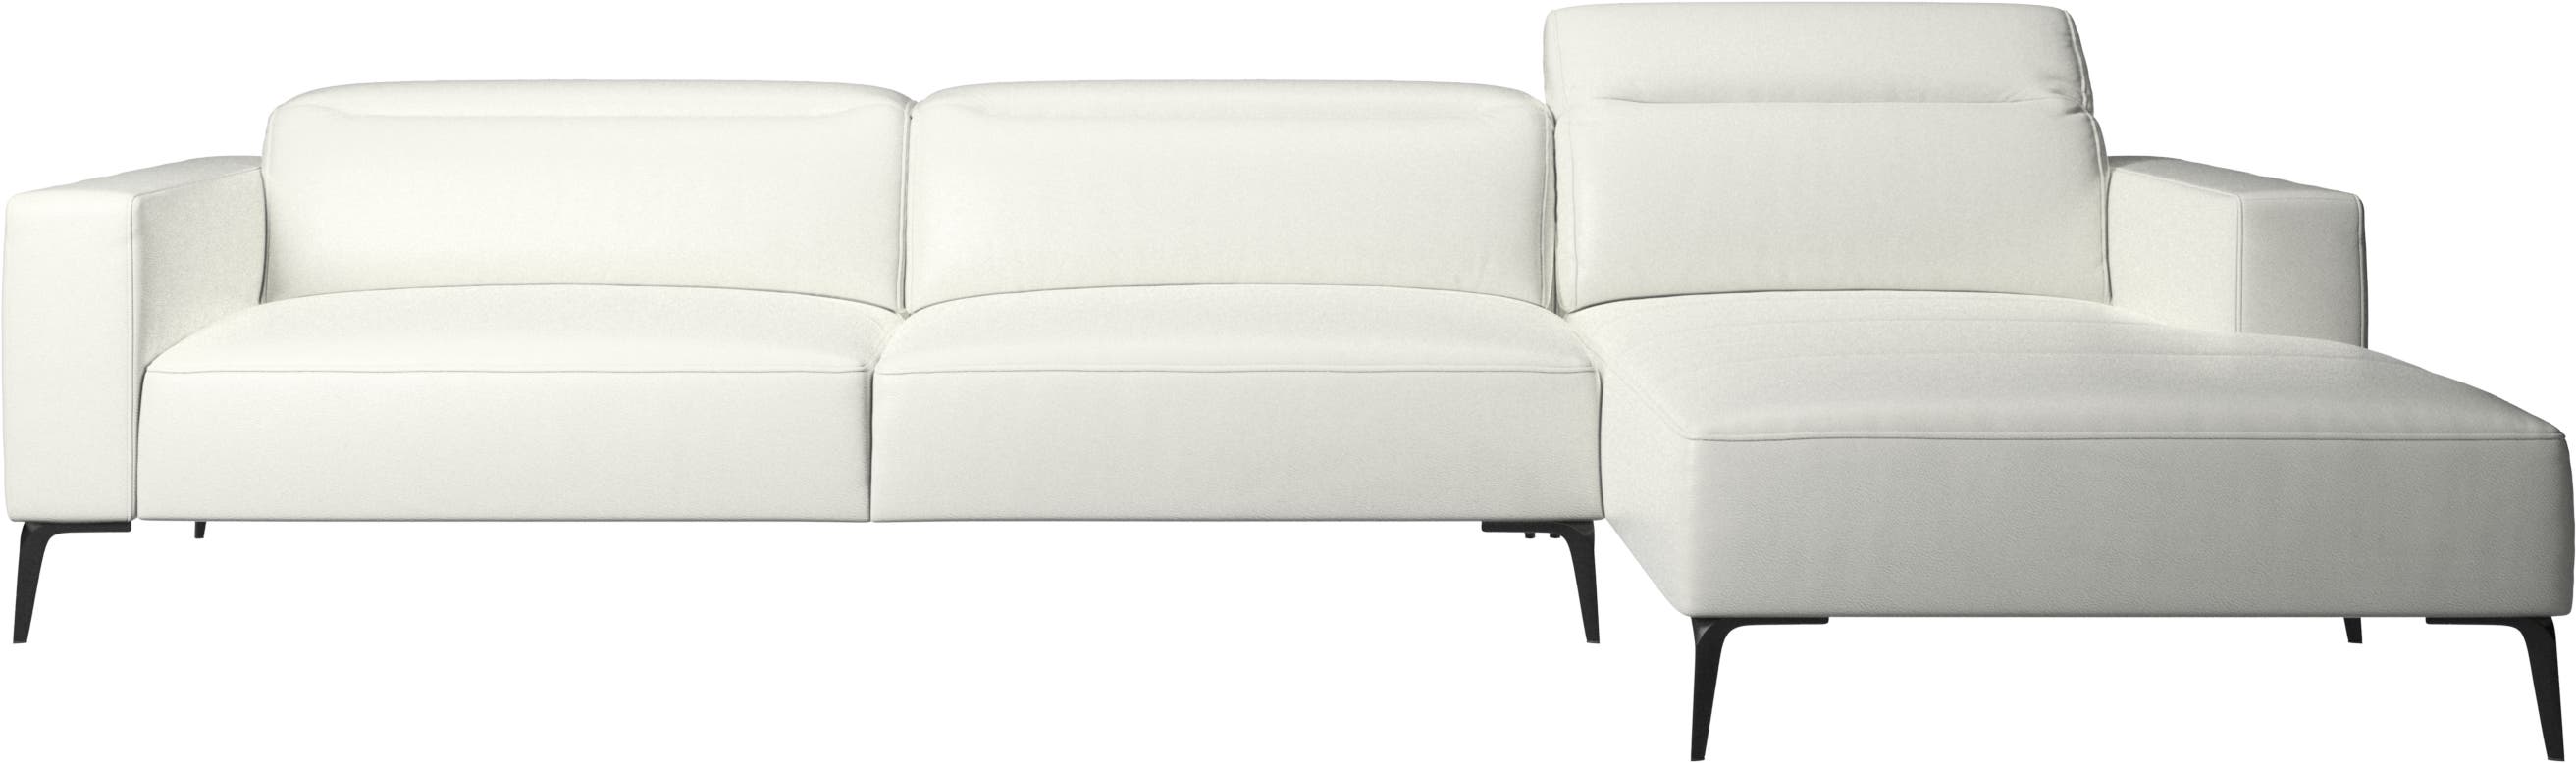 Zürich sofa with resting unit